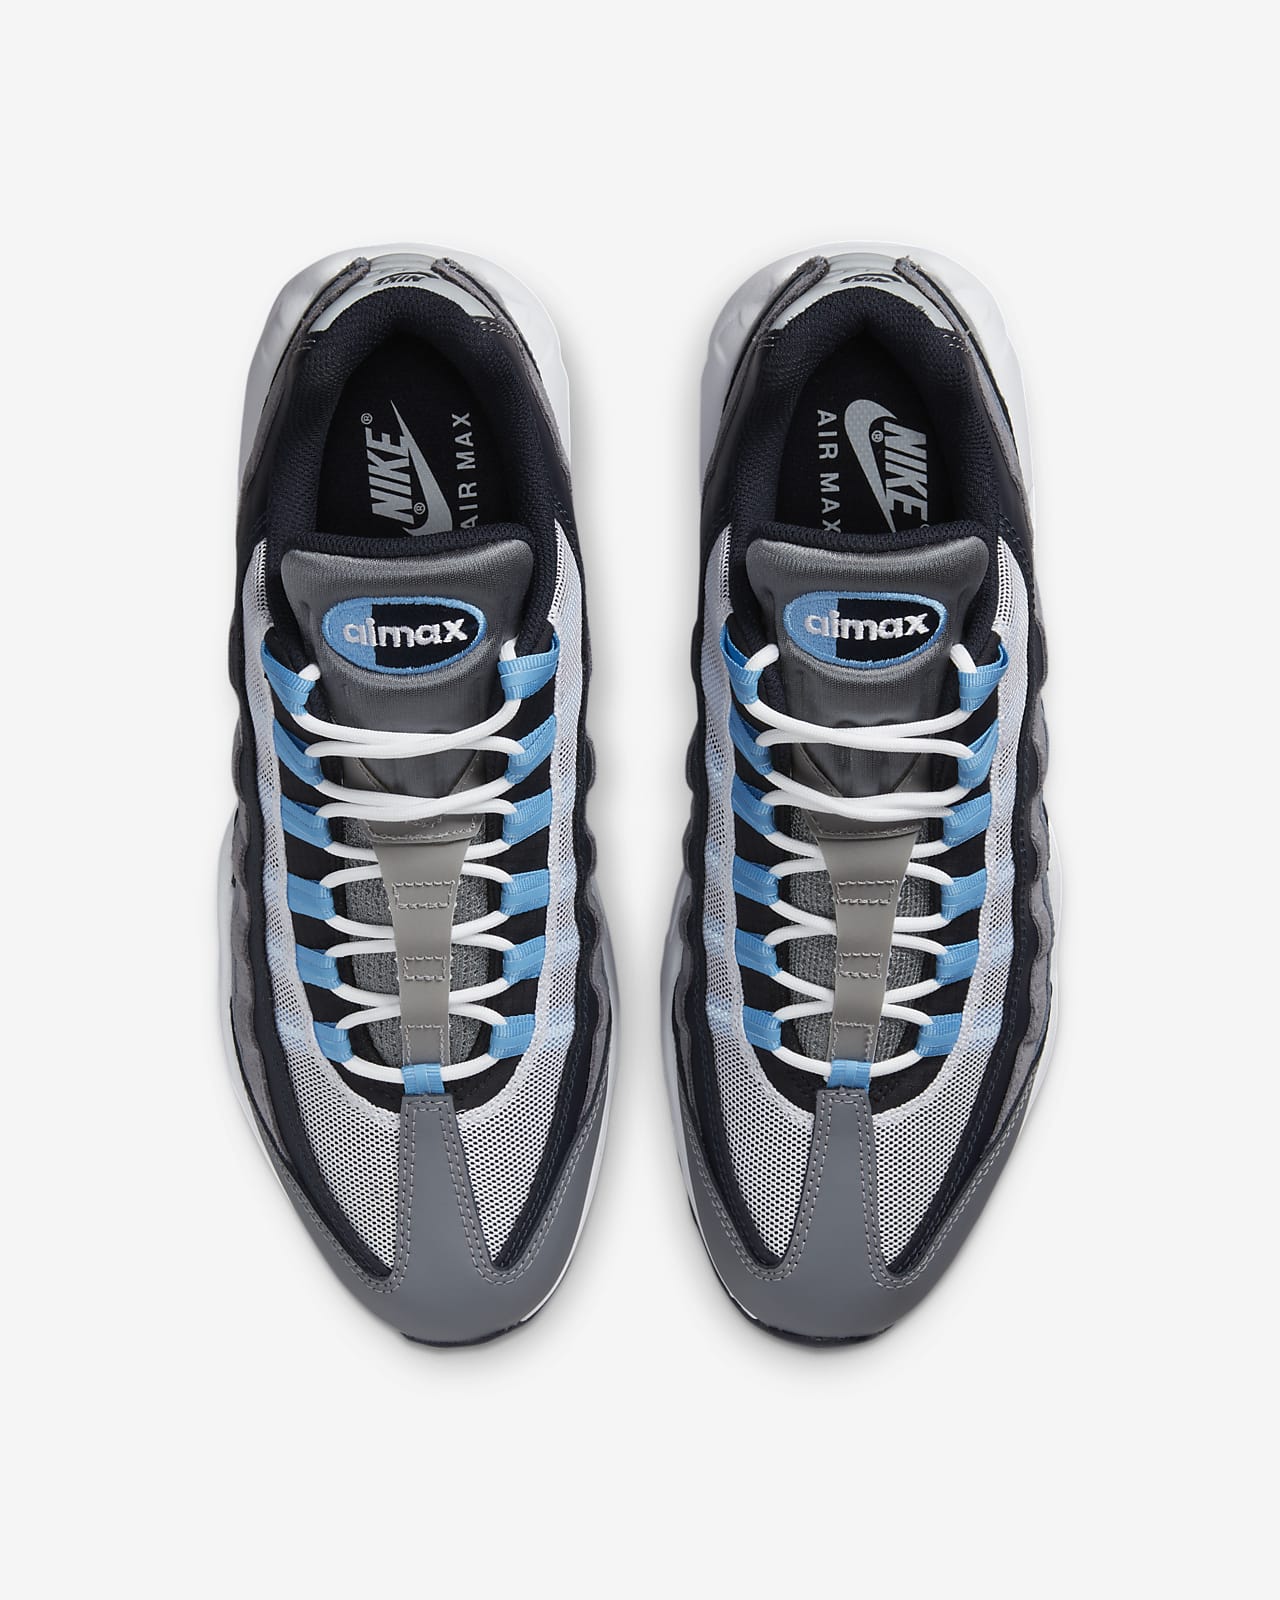 Nike Max 95 Men's Shoes.